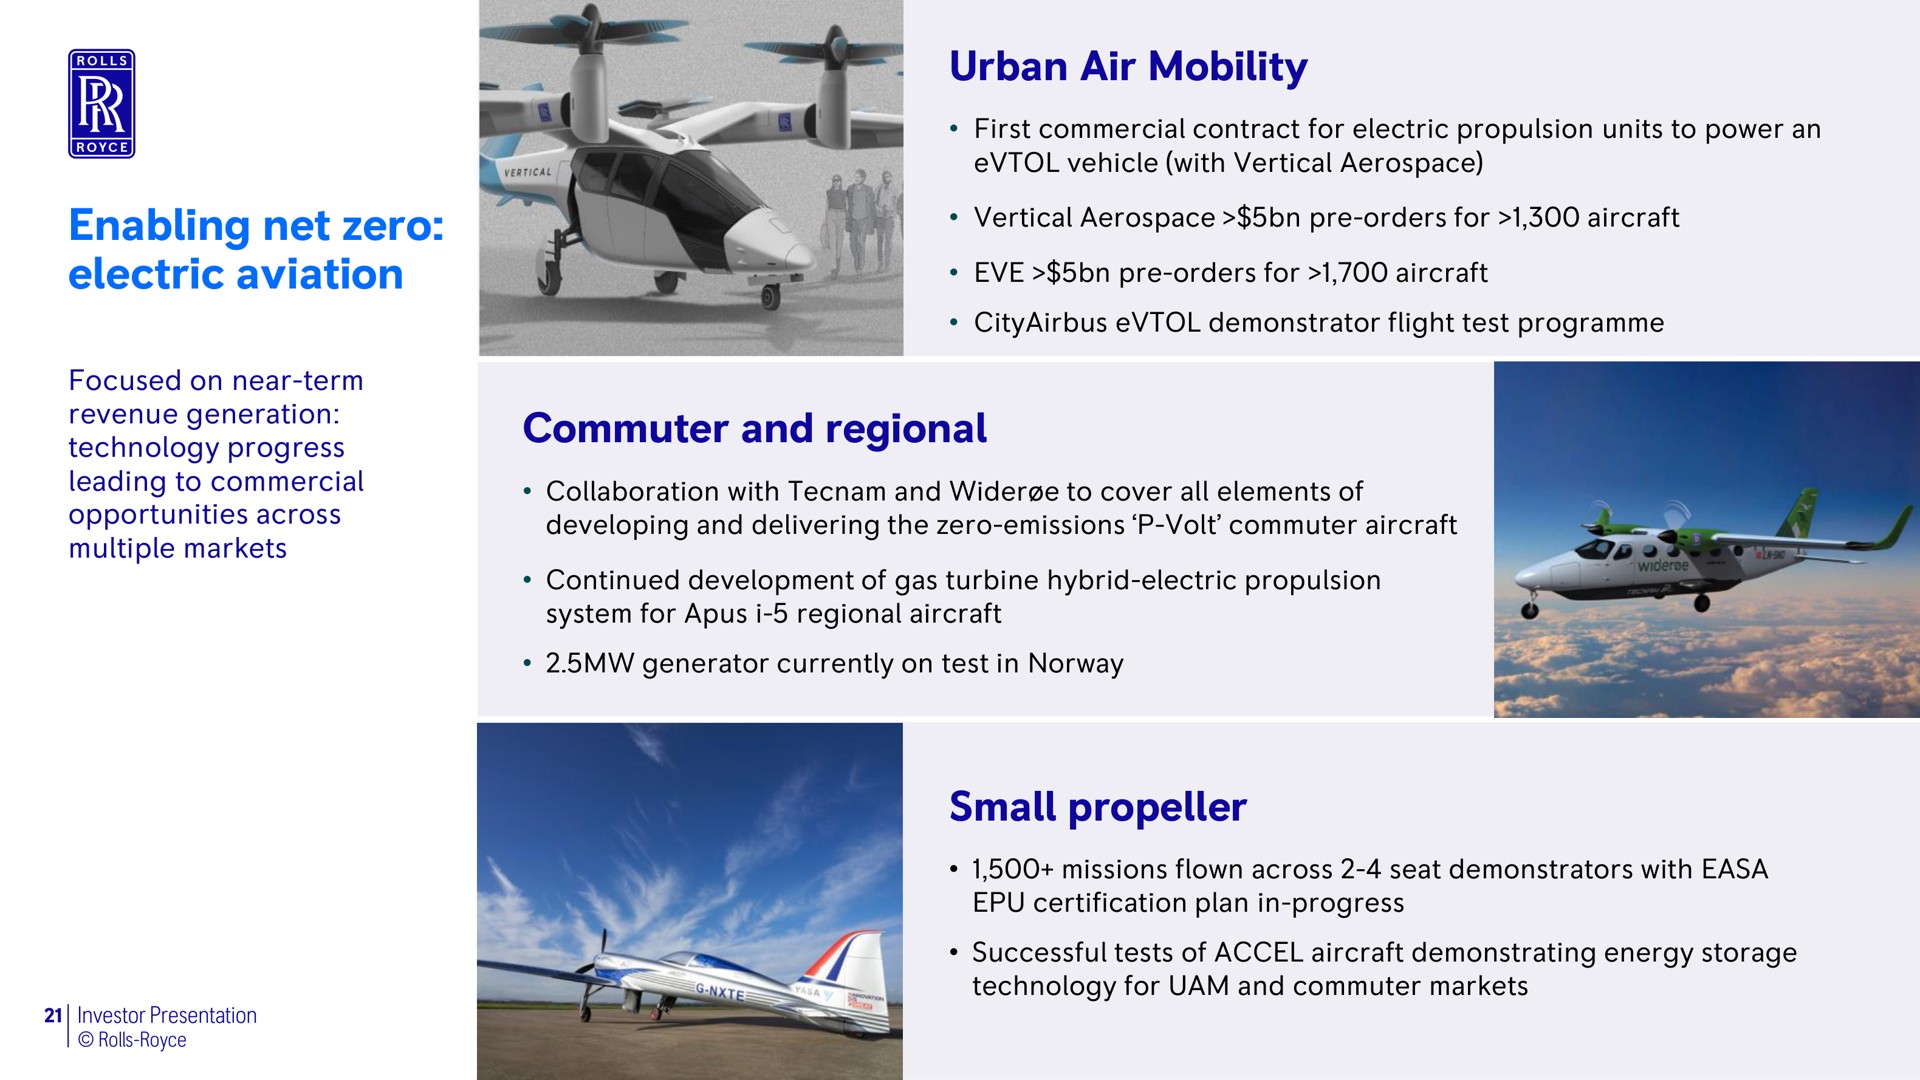 urban air mobility commuter and regional small propeller enabling net zero electric aviation technology progress | Rolls-Royce Holdings